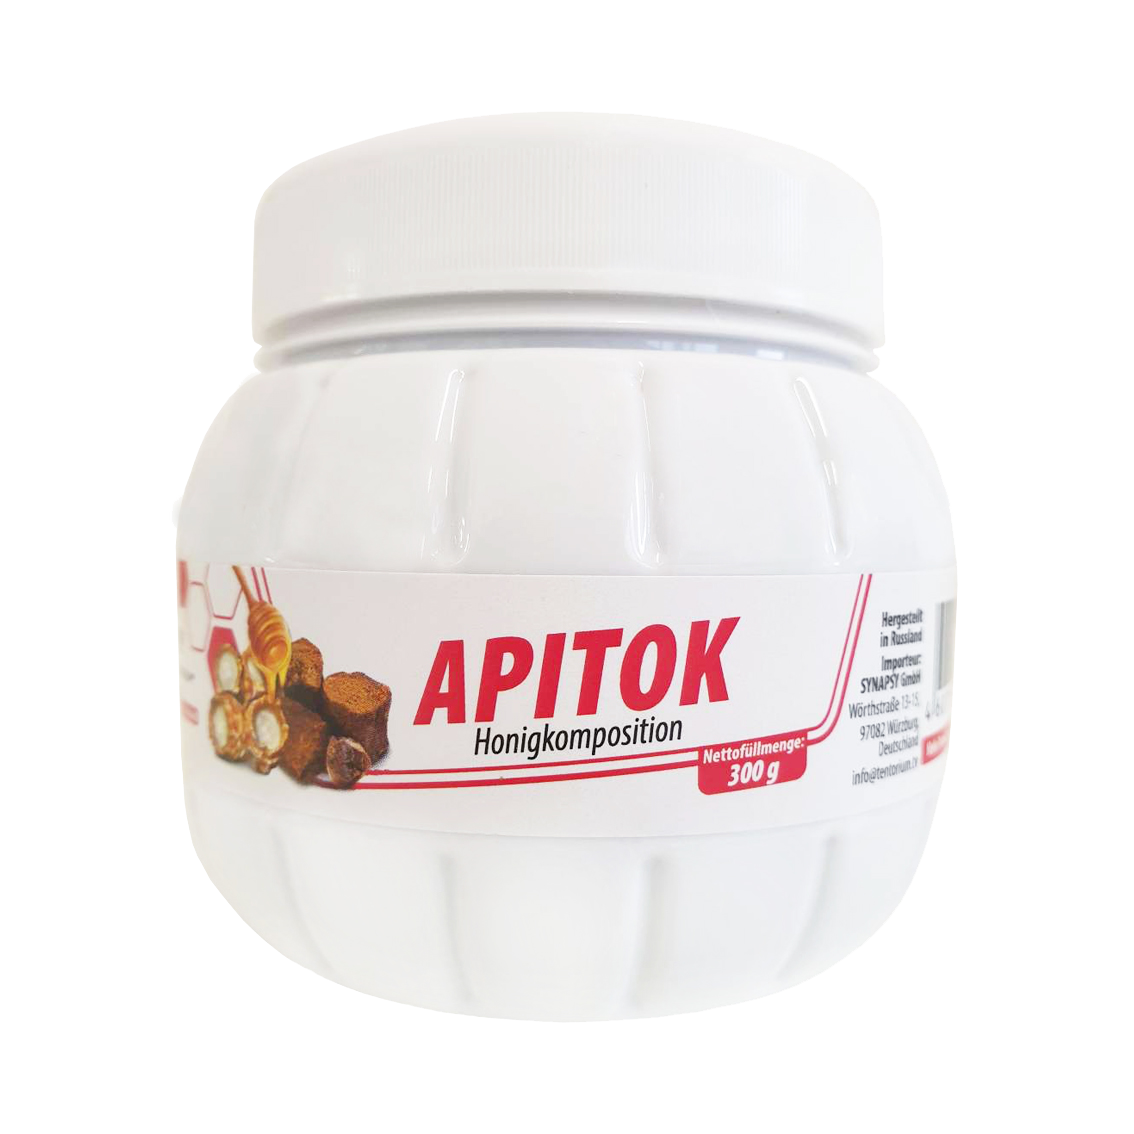 Honey Composition "Apitok" (300g)